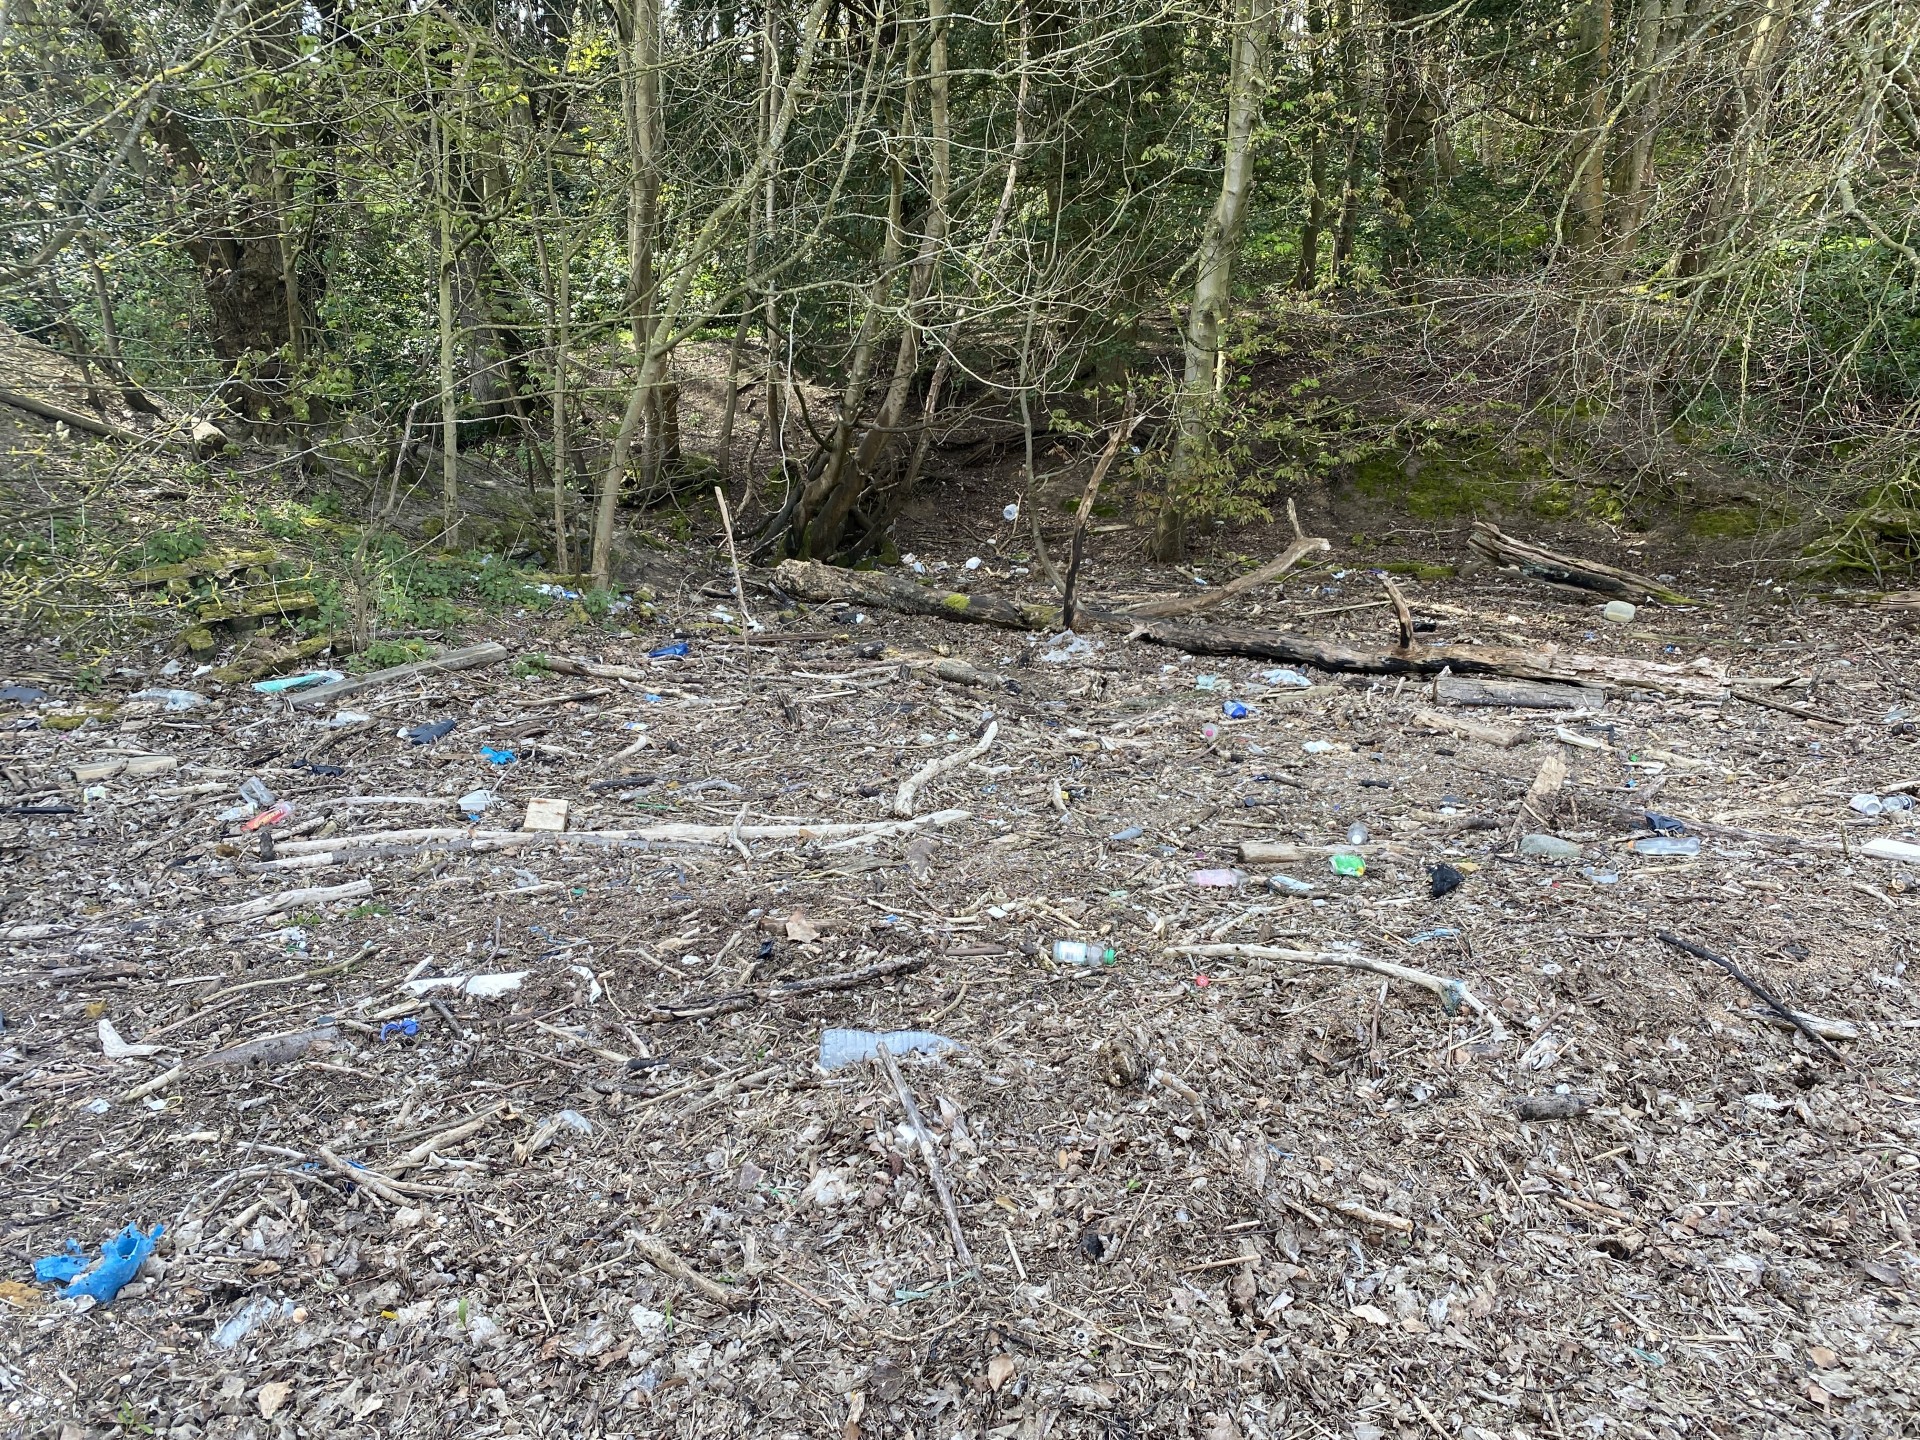 A refuse strewn beach in Woolverstone, Suffolk.